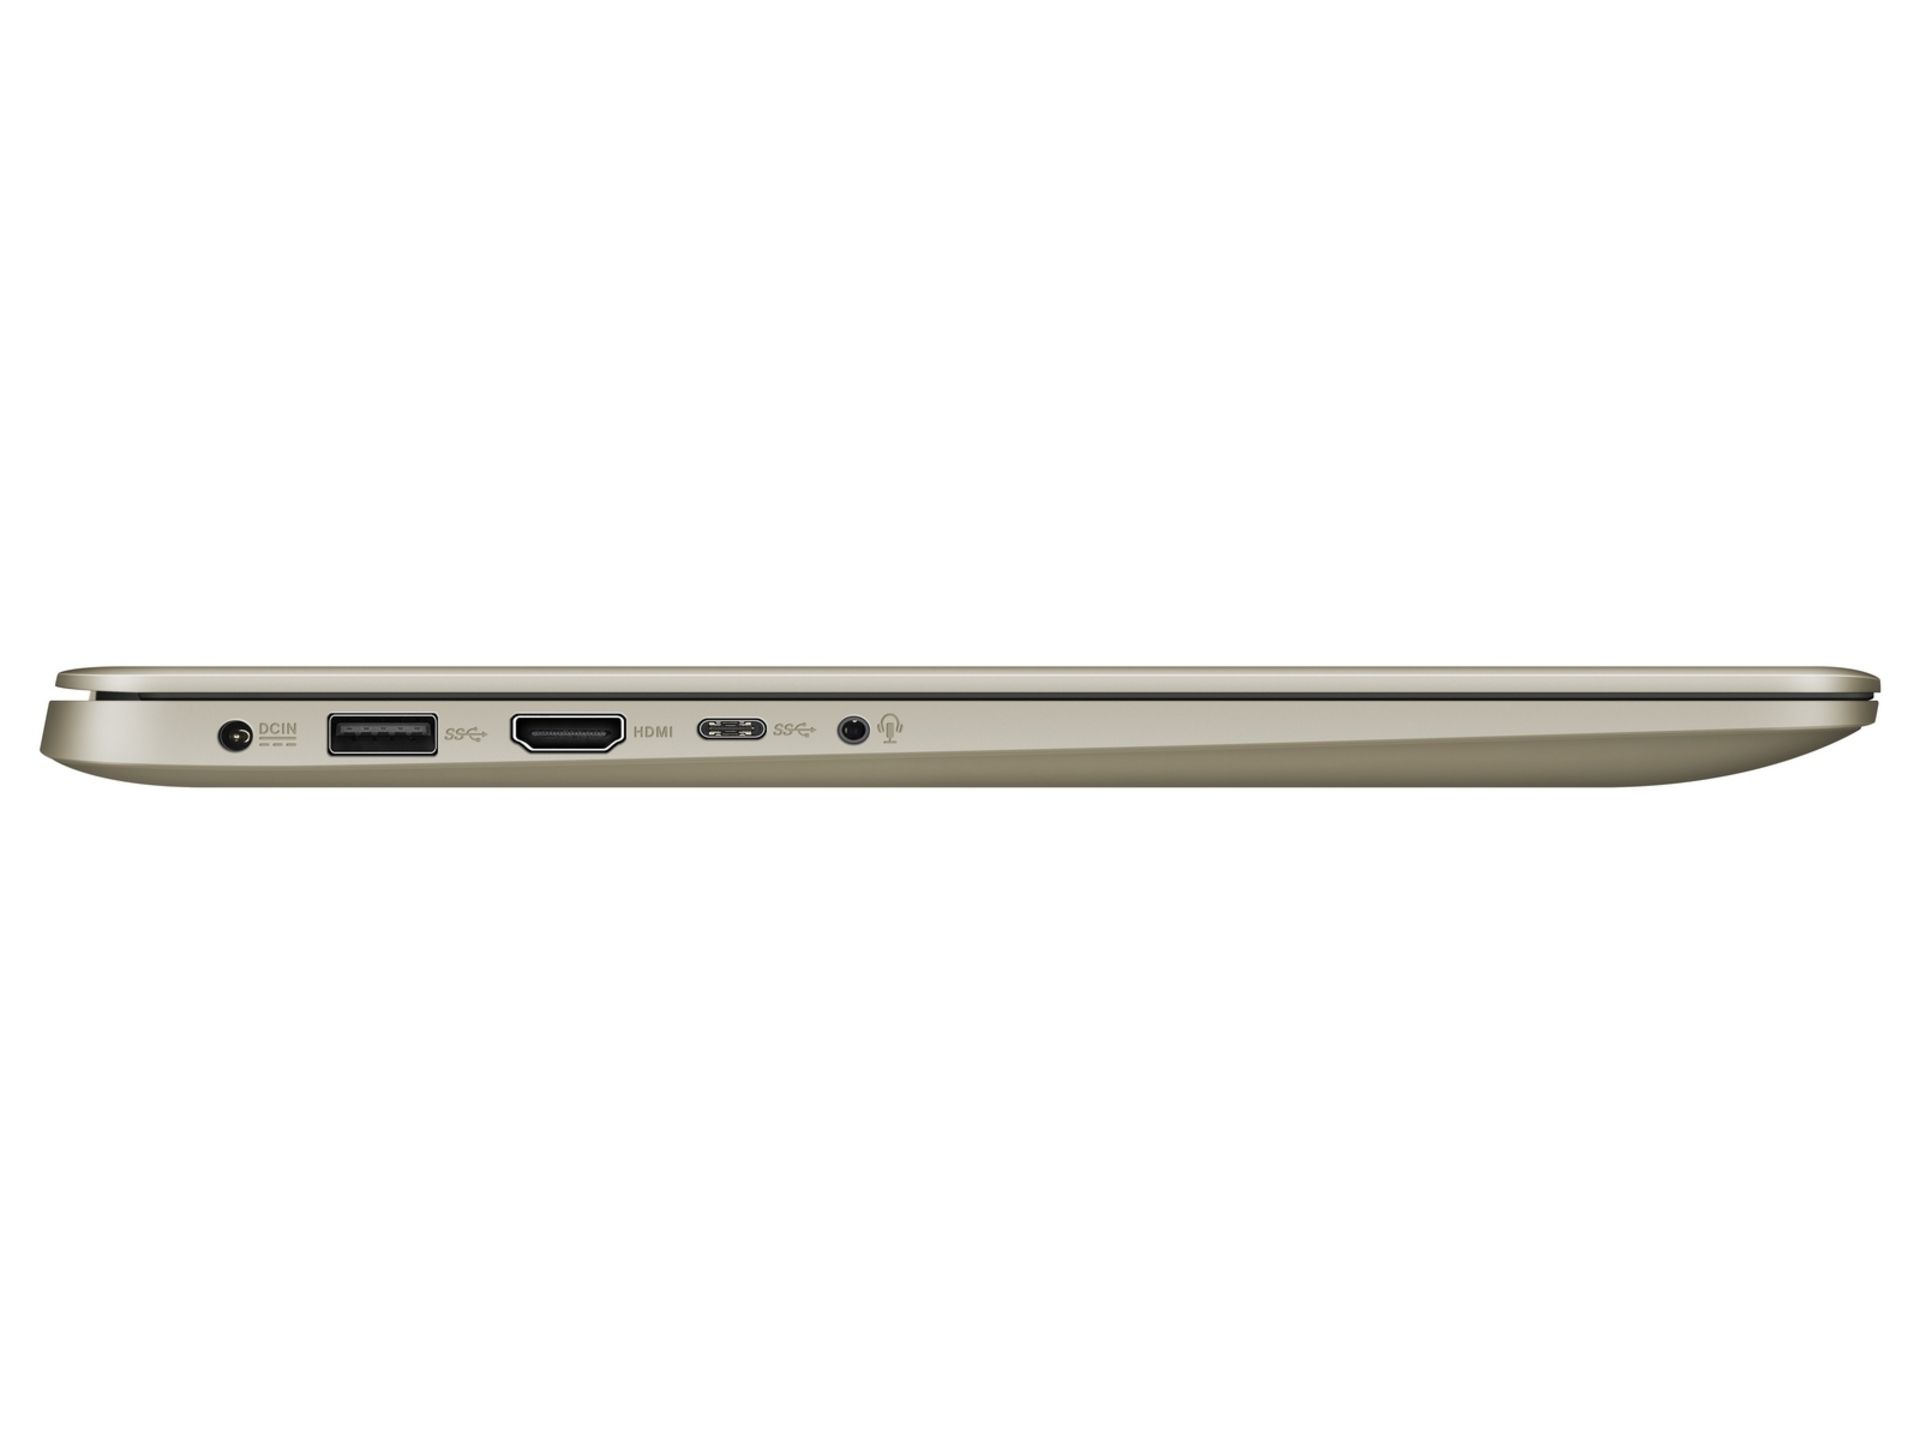 VivoBook S14